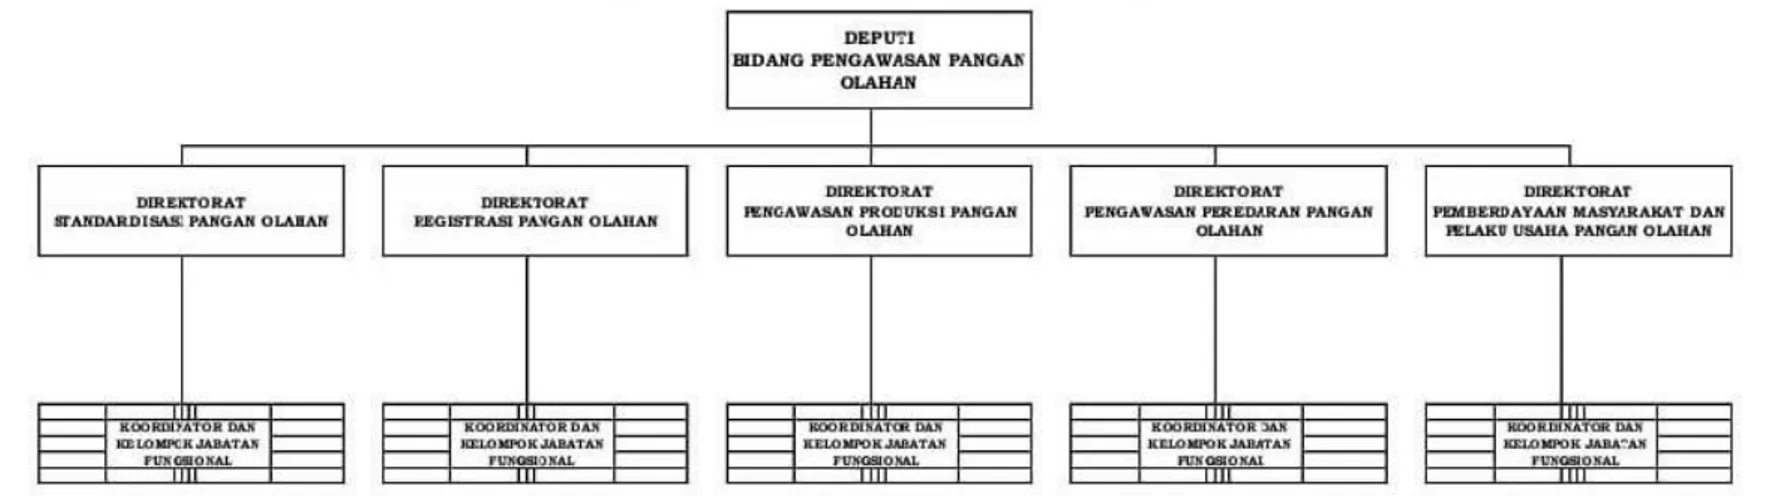 Gambar 1. Struktur Organisasi Deputi Bidang Pengawasan Pangan Olahan